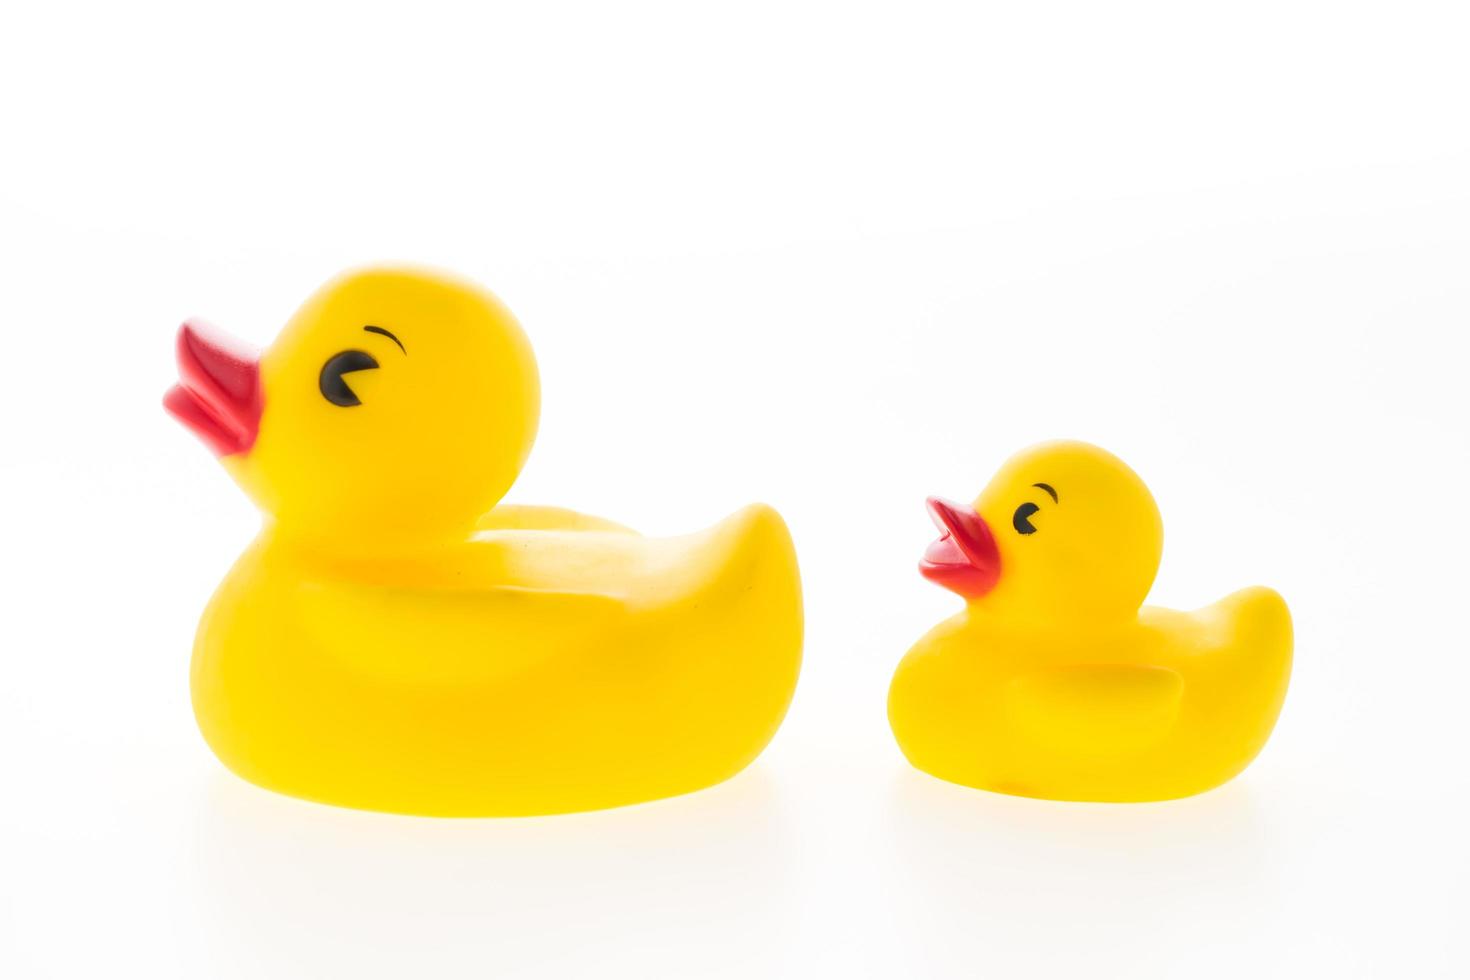 Yellow rubber ducks on white background photo